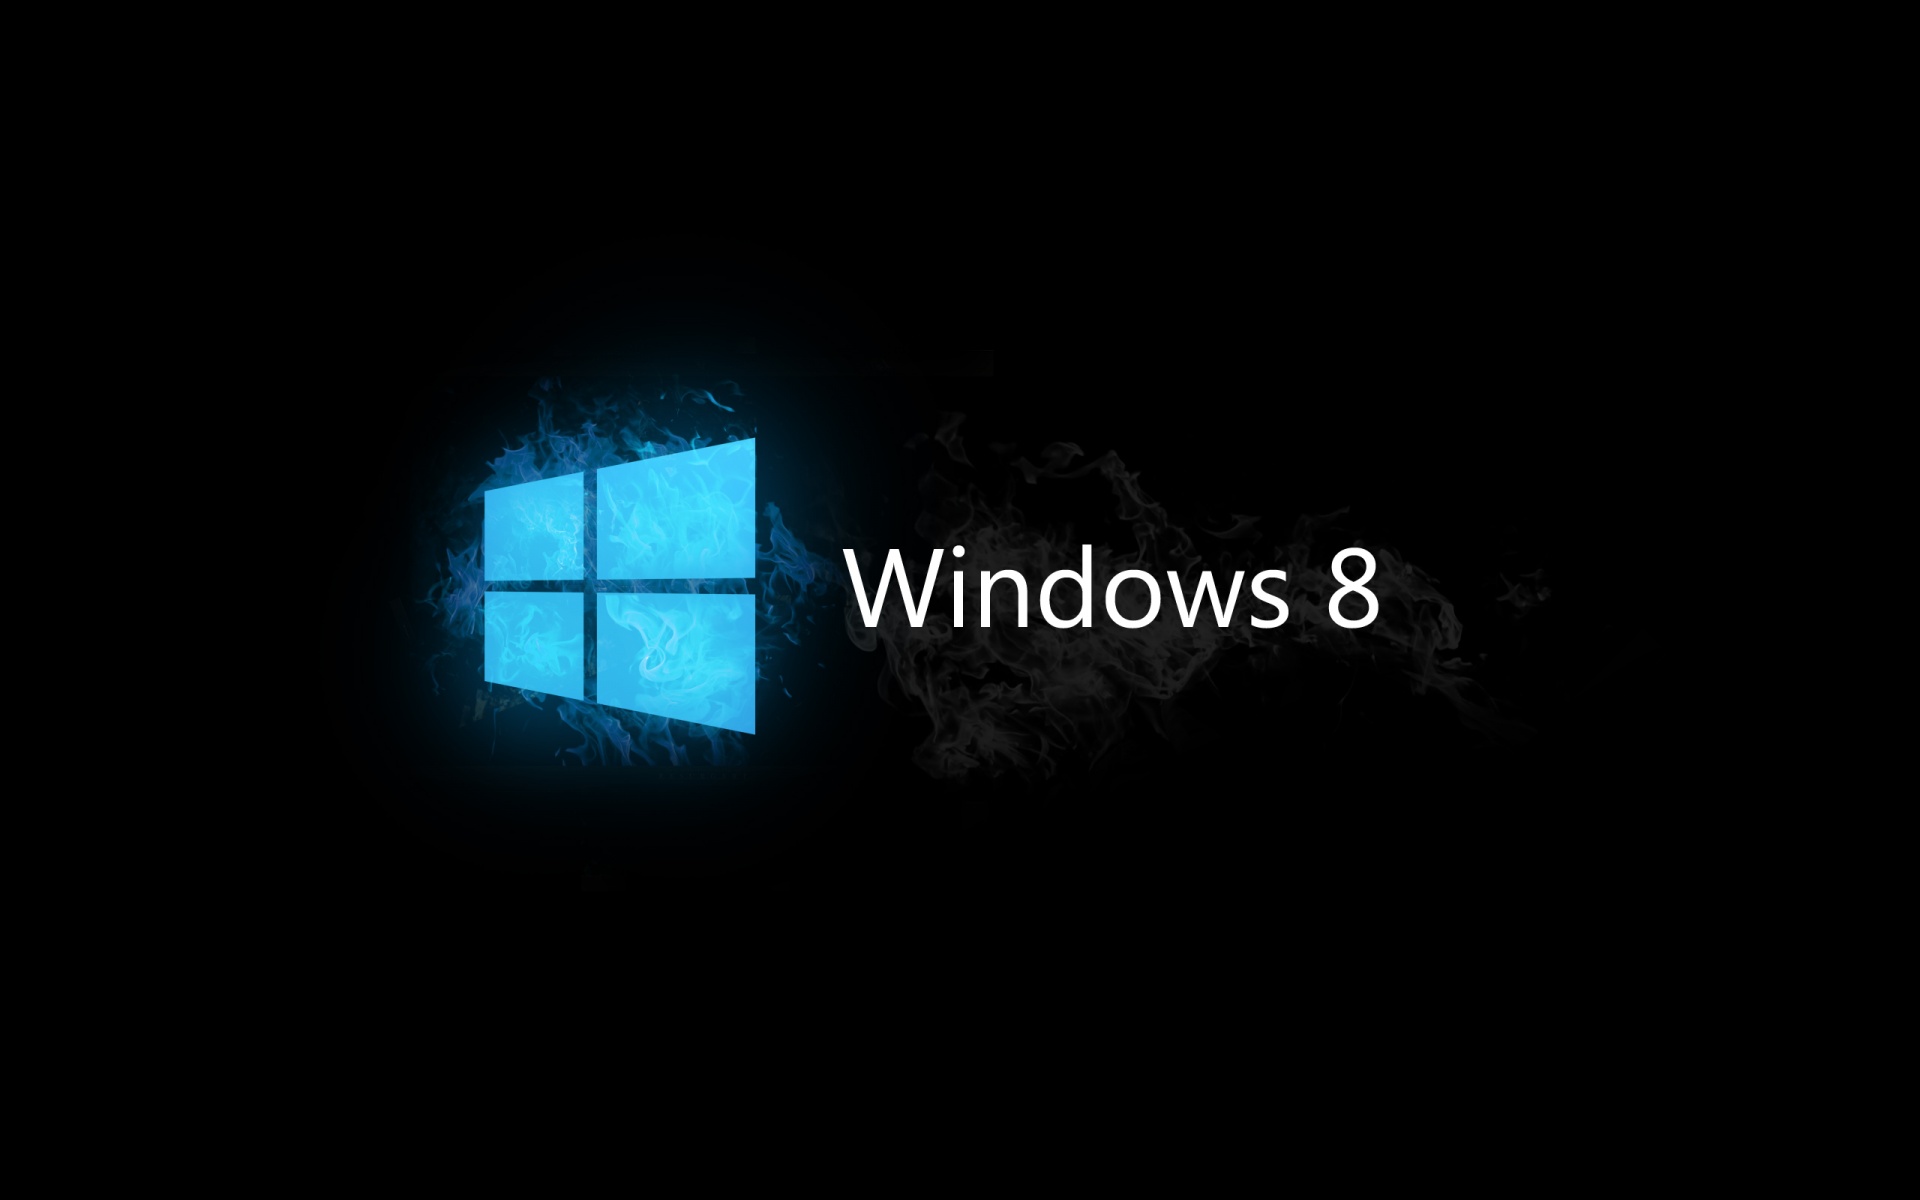 Download Windows 8 Background Windows 8 Metro Smoke Wallpaper x